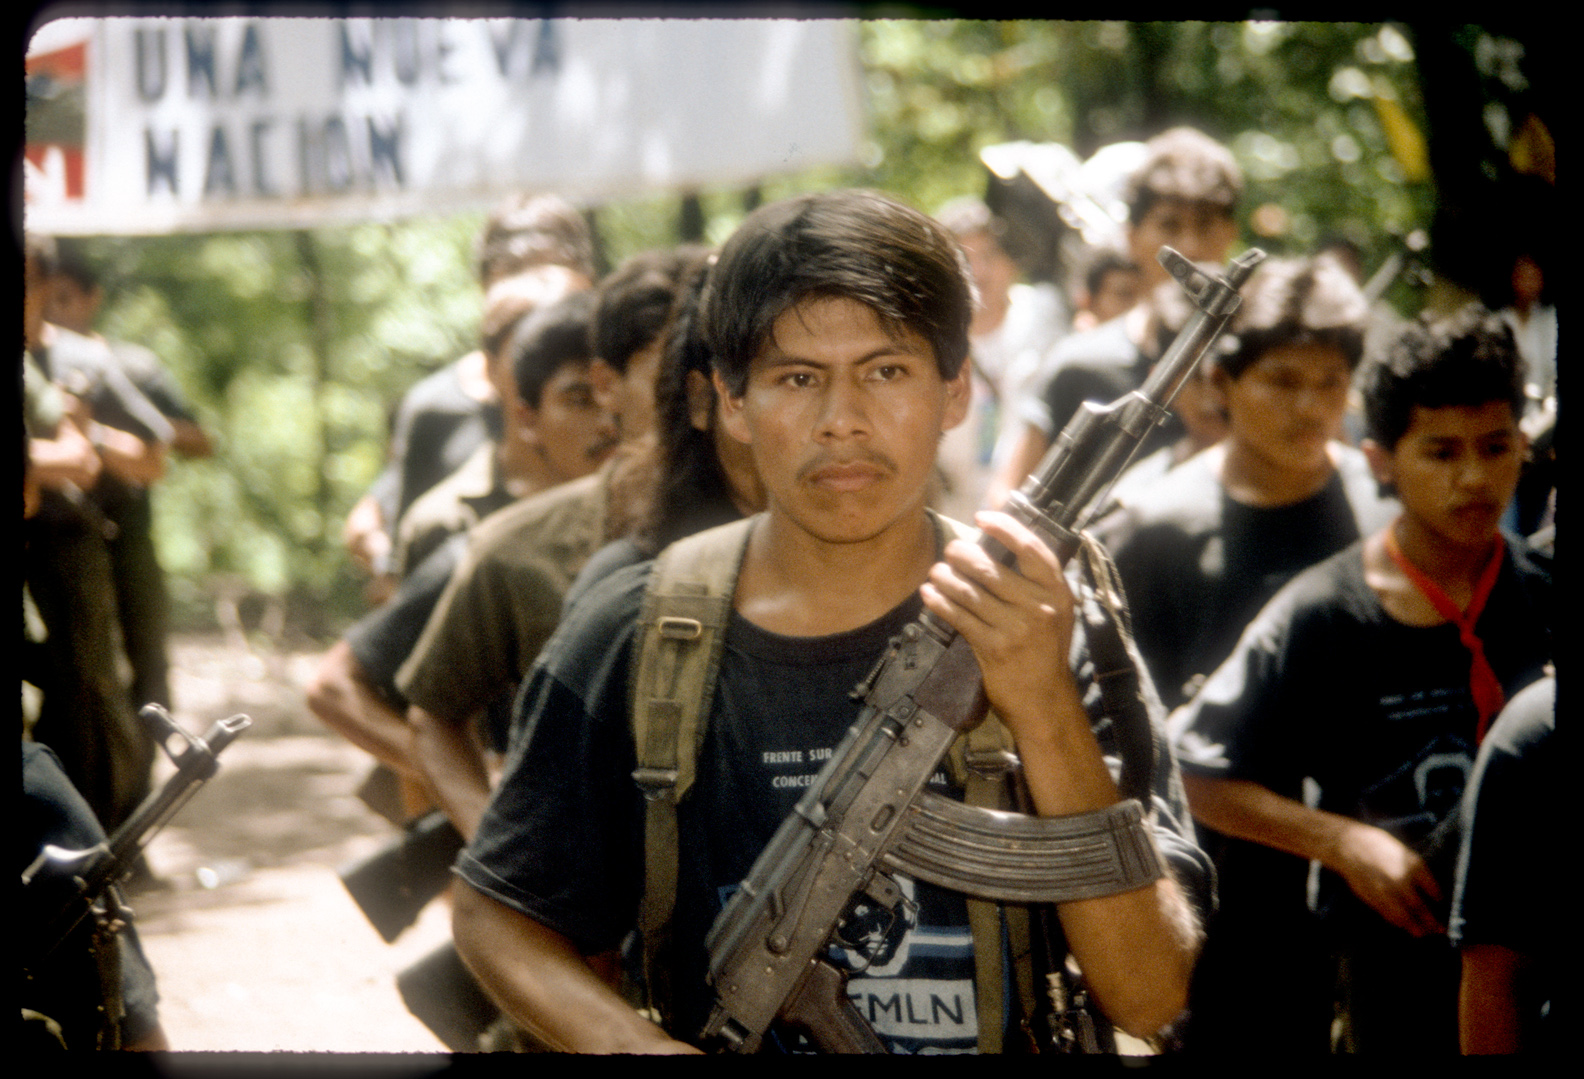 FMLN combatants, Chalatenago, El Salvador, 1992. (Image by scottmontreal)